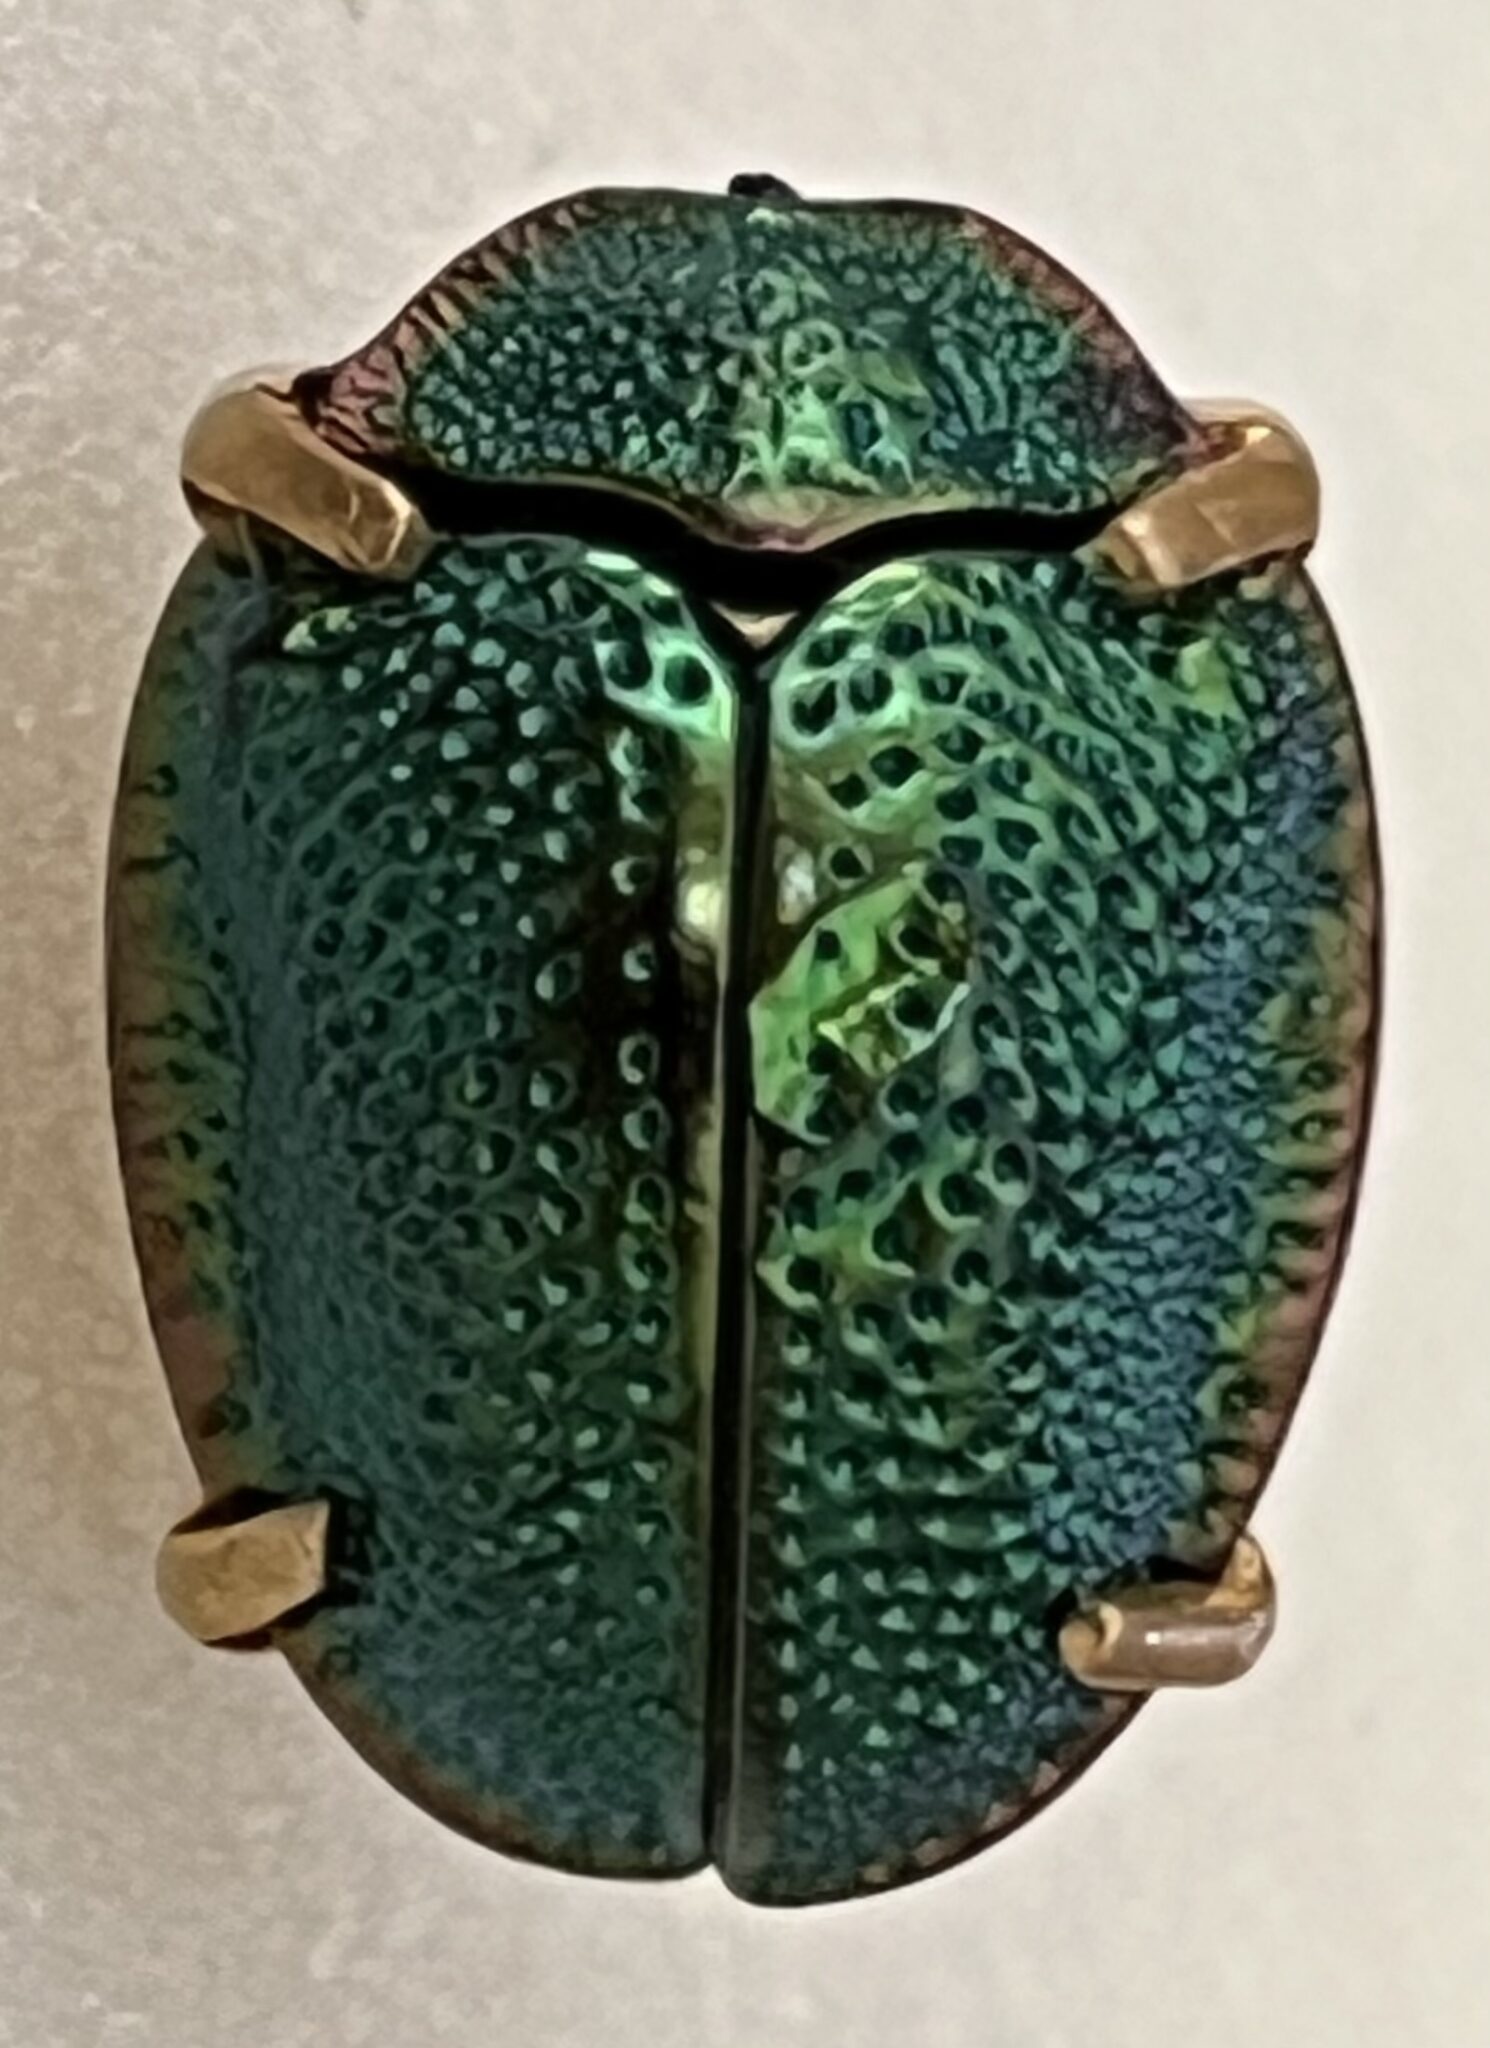 Bug mounted in metal